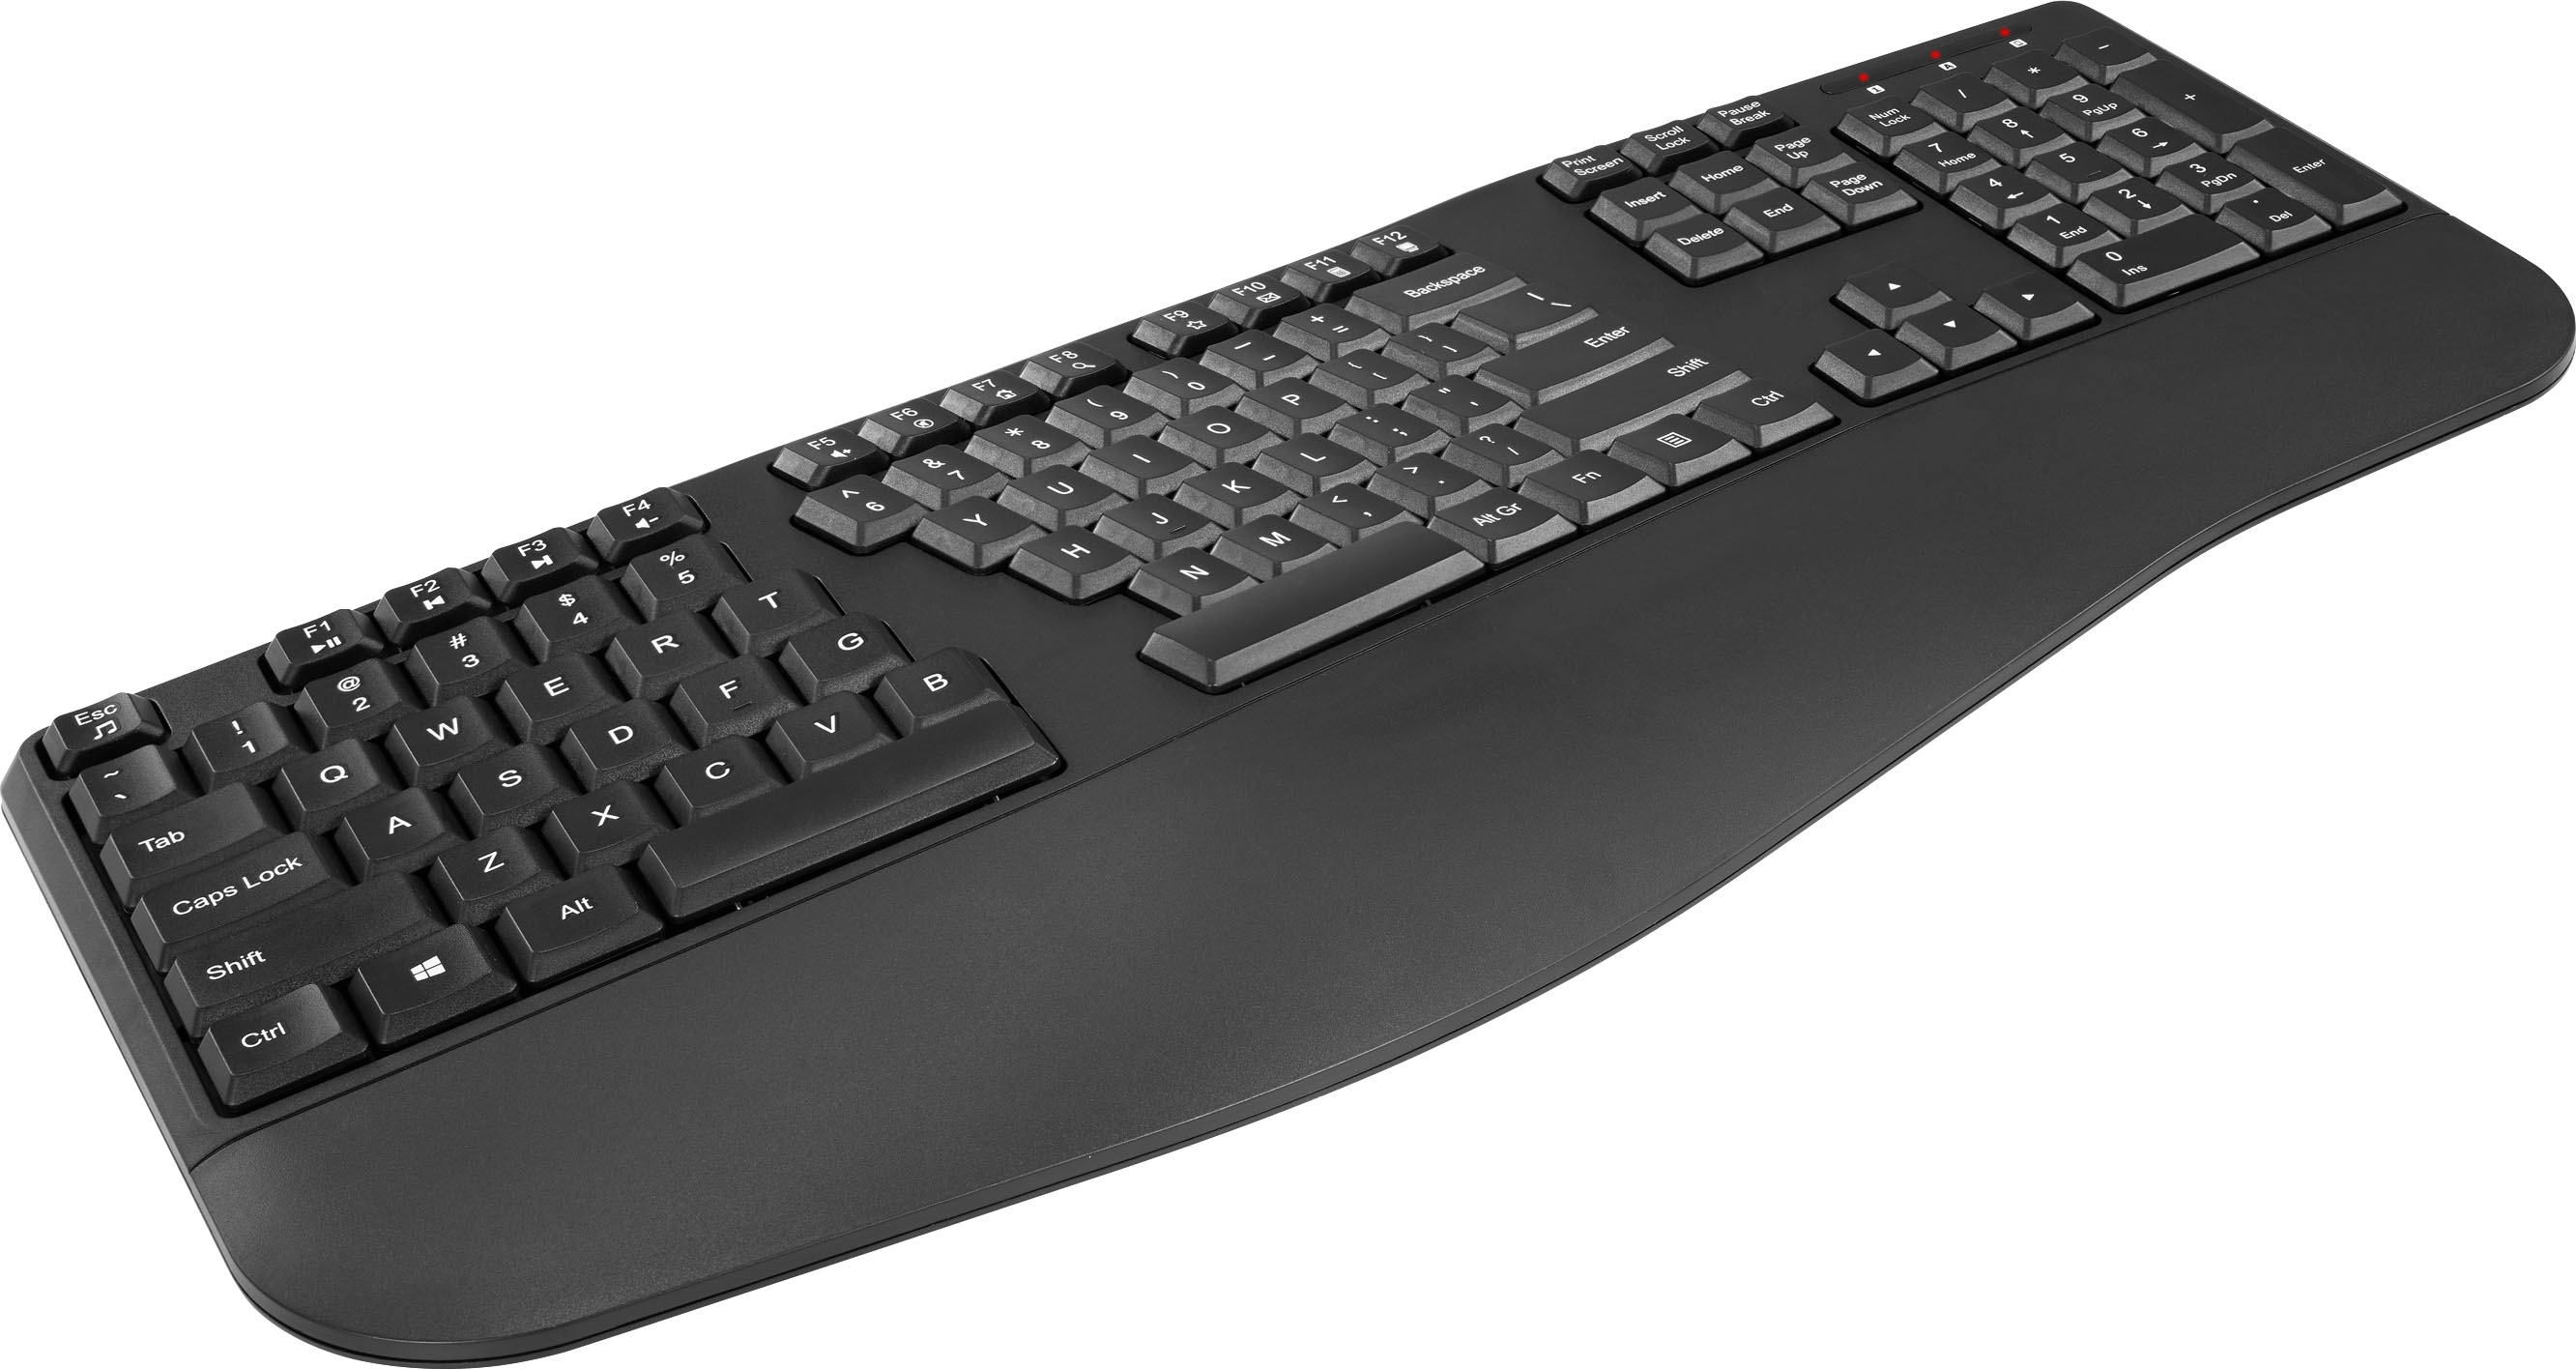 Angle View: Adesso - Tru-Form WKB-4500UB Ergonomic Full-size Wireless Membrane Keyboard with Touchpad - Black